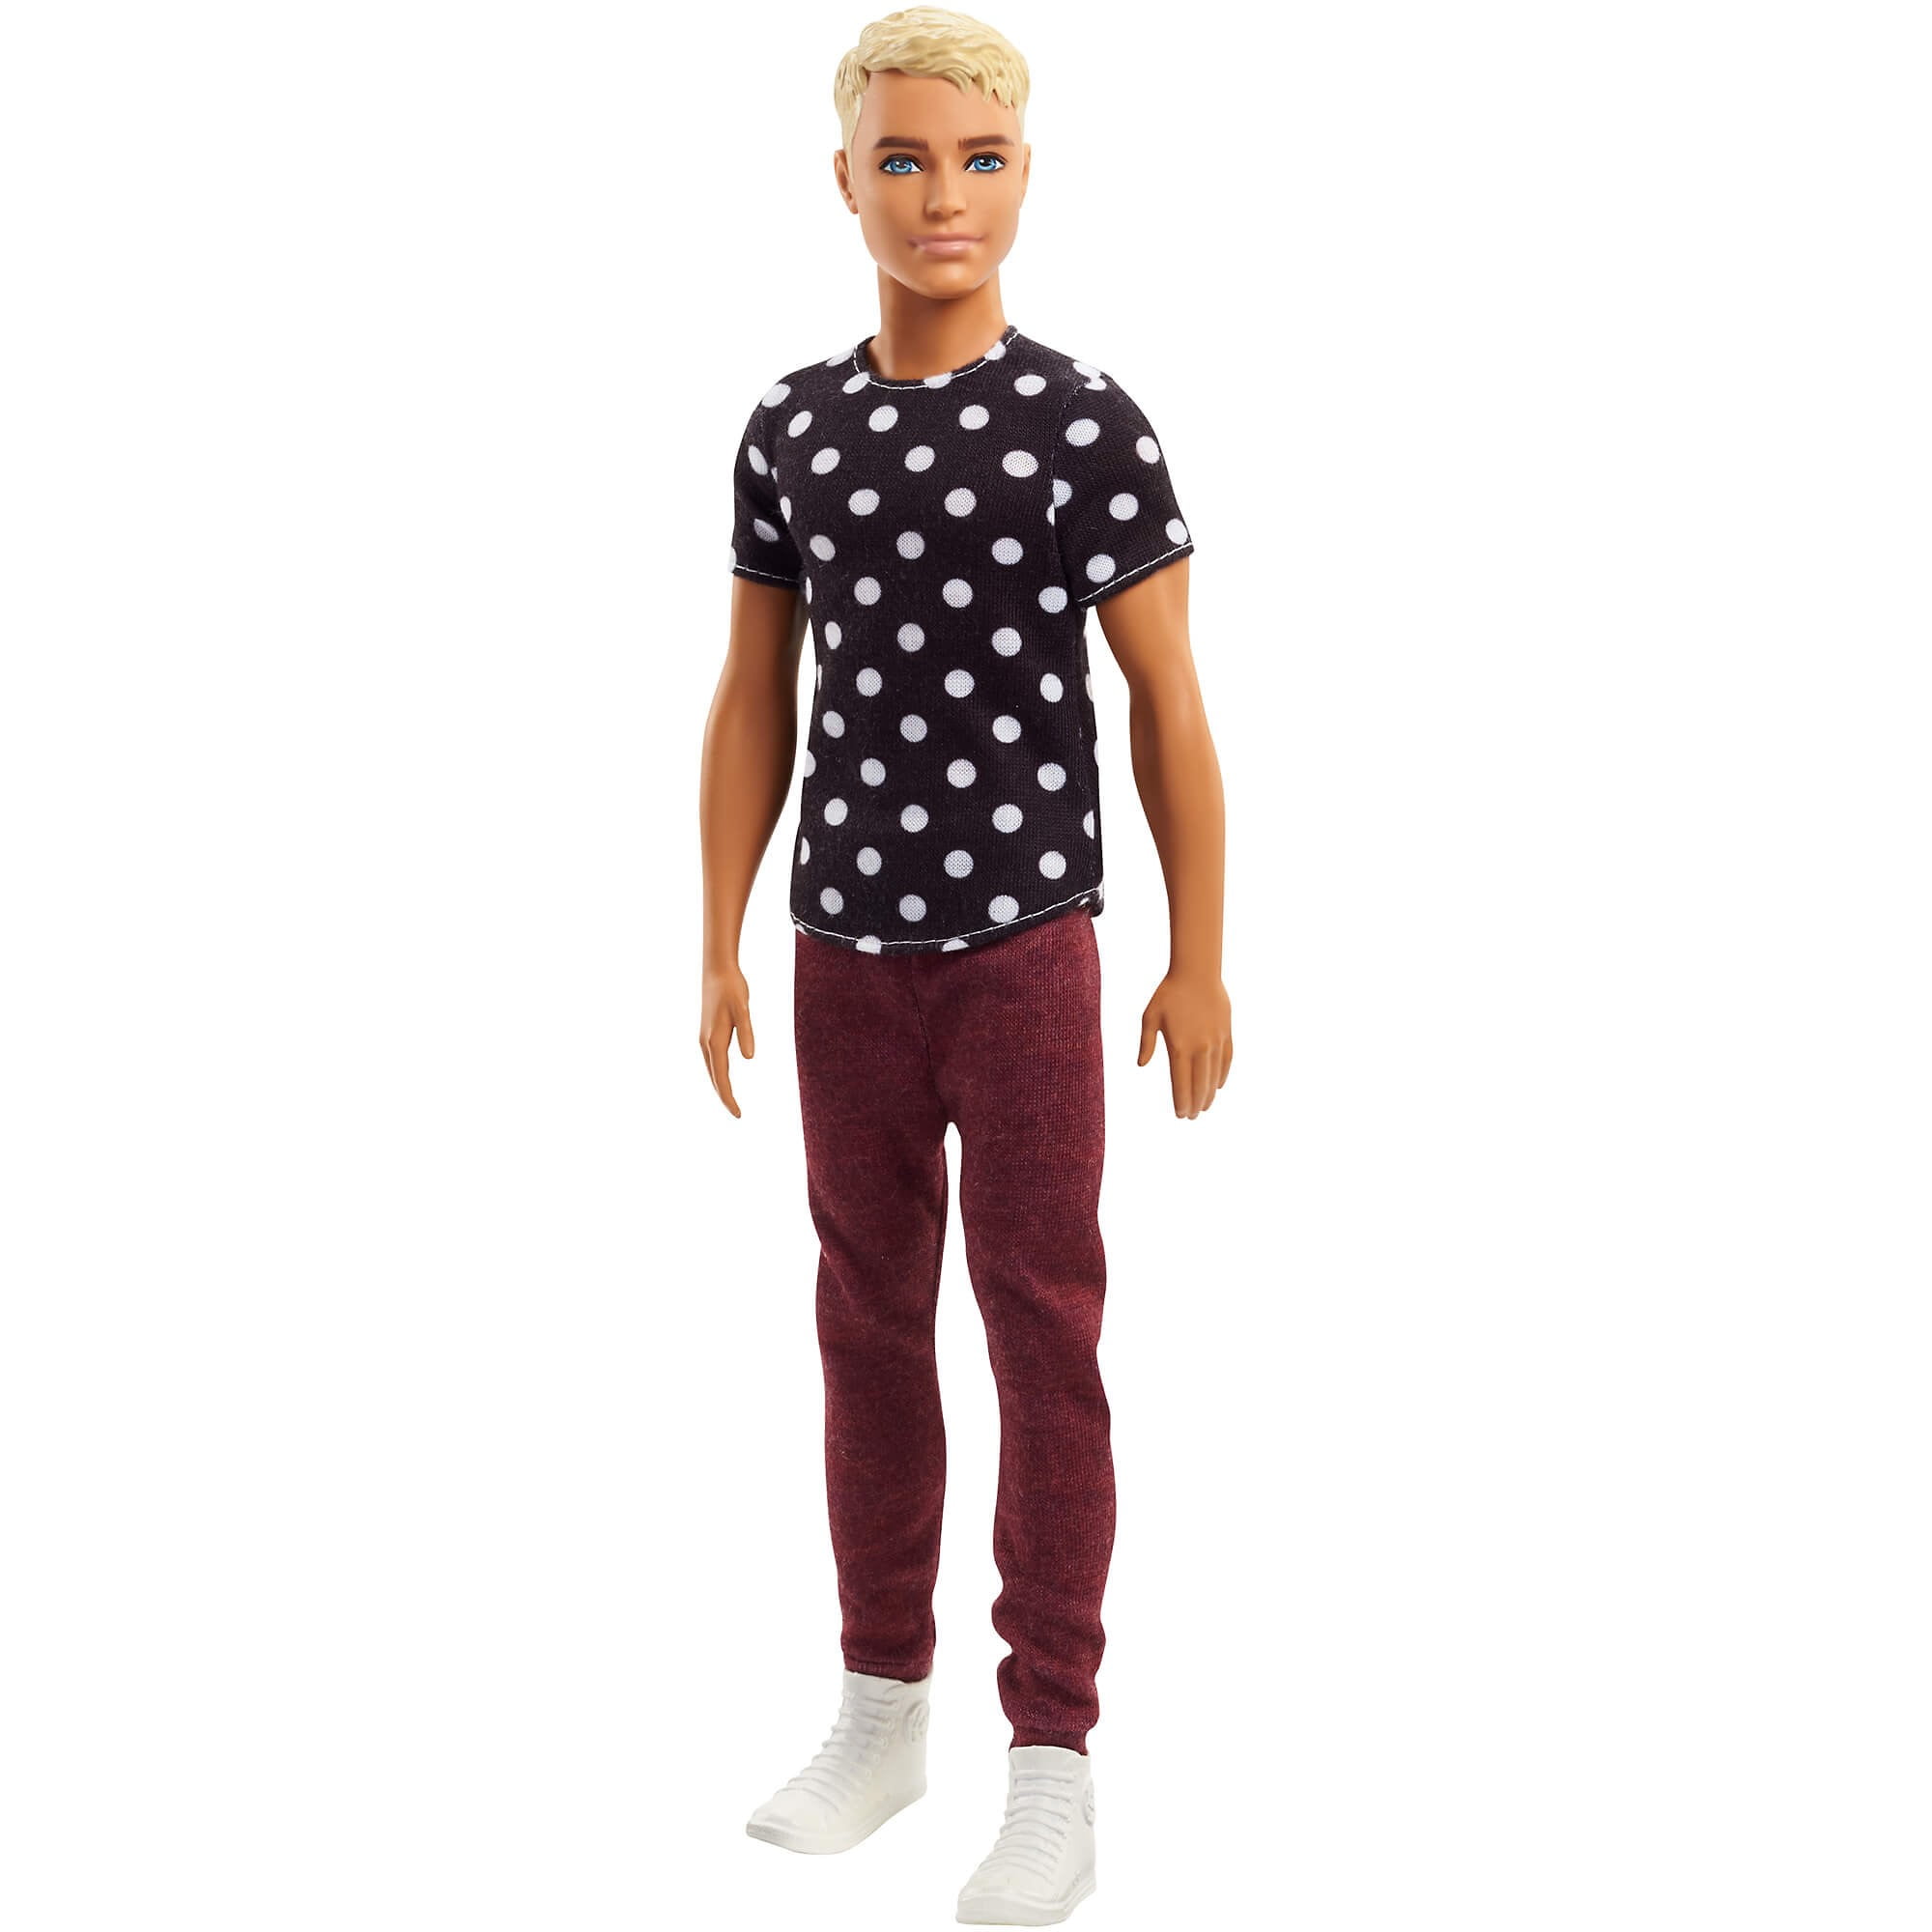 Barbie Fashionistas Ken Doll Wearing Polka Dot Top & Red Pants ...